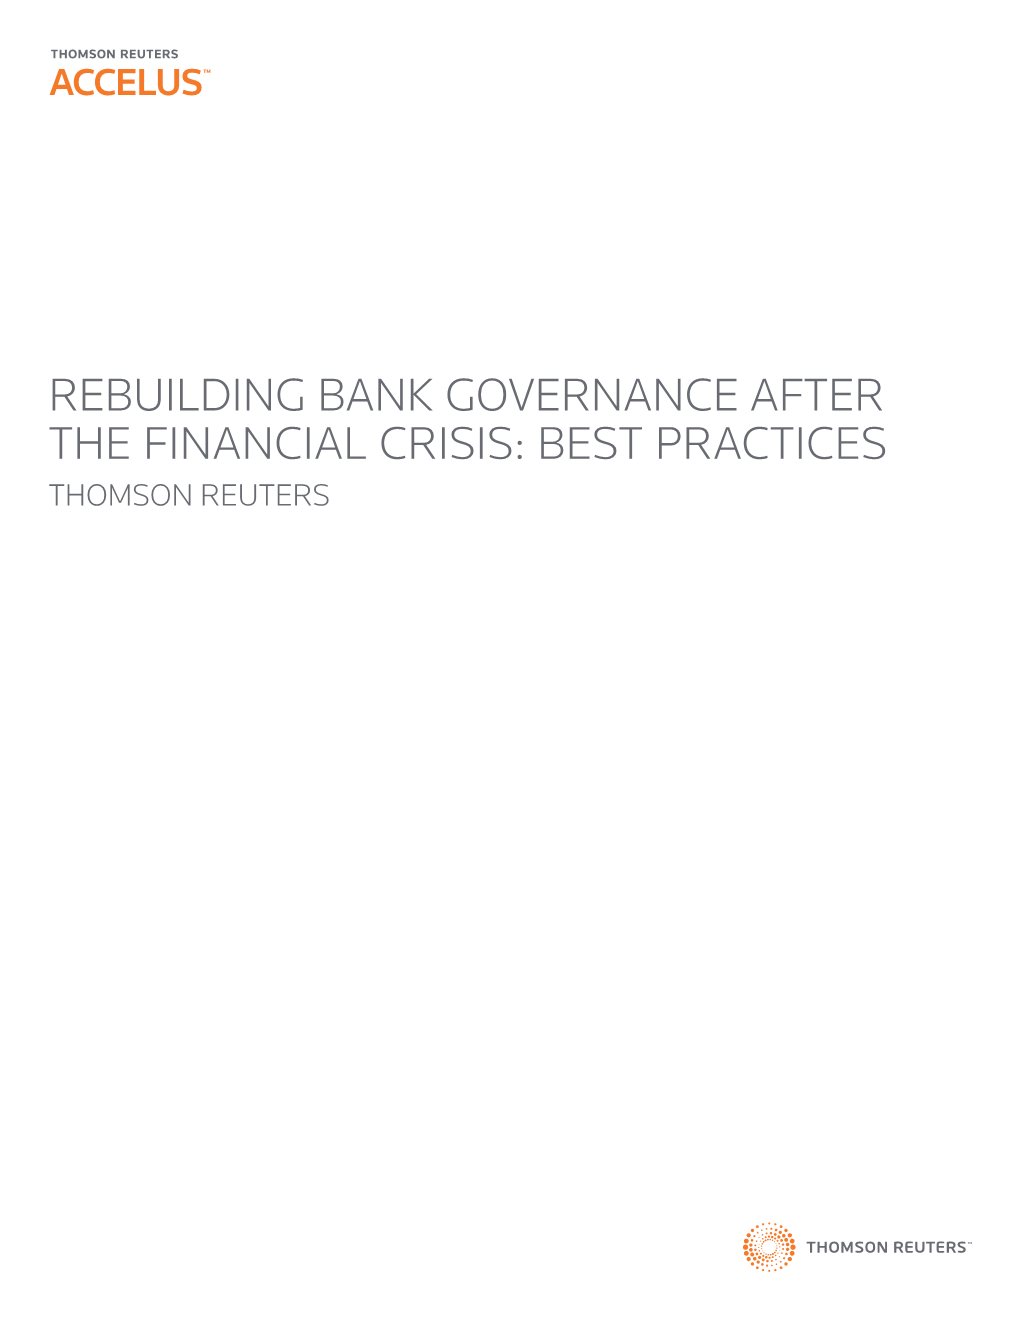 Rebuilding Bank Governance After the Financial Crisis: Best Practices Thomson Reuters CONTENTS